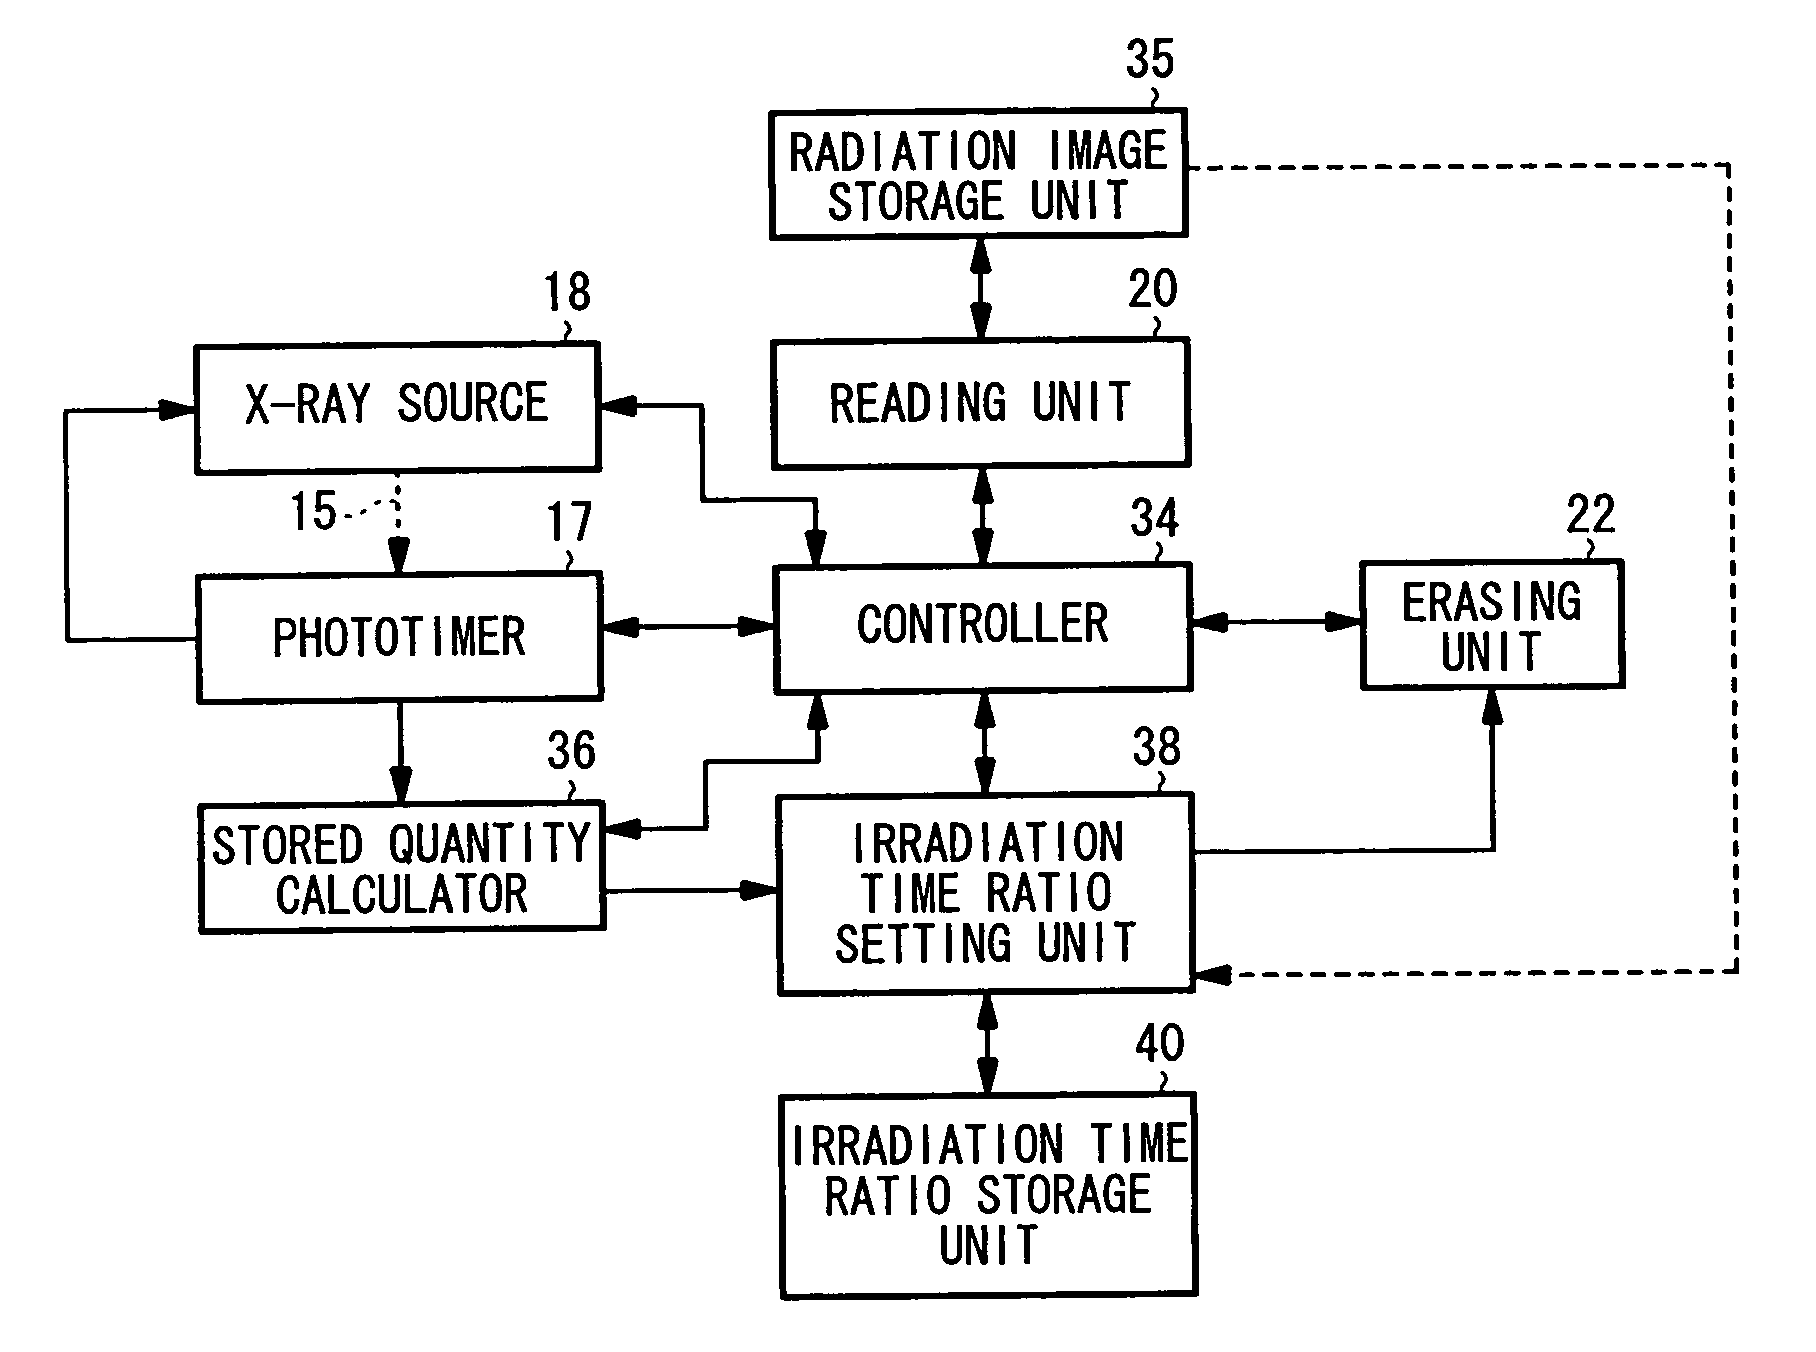 Apparatus for and method of erasing residual radiation image